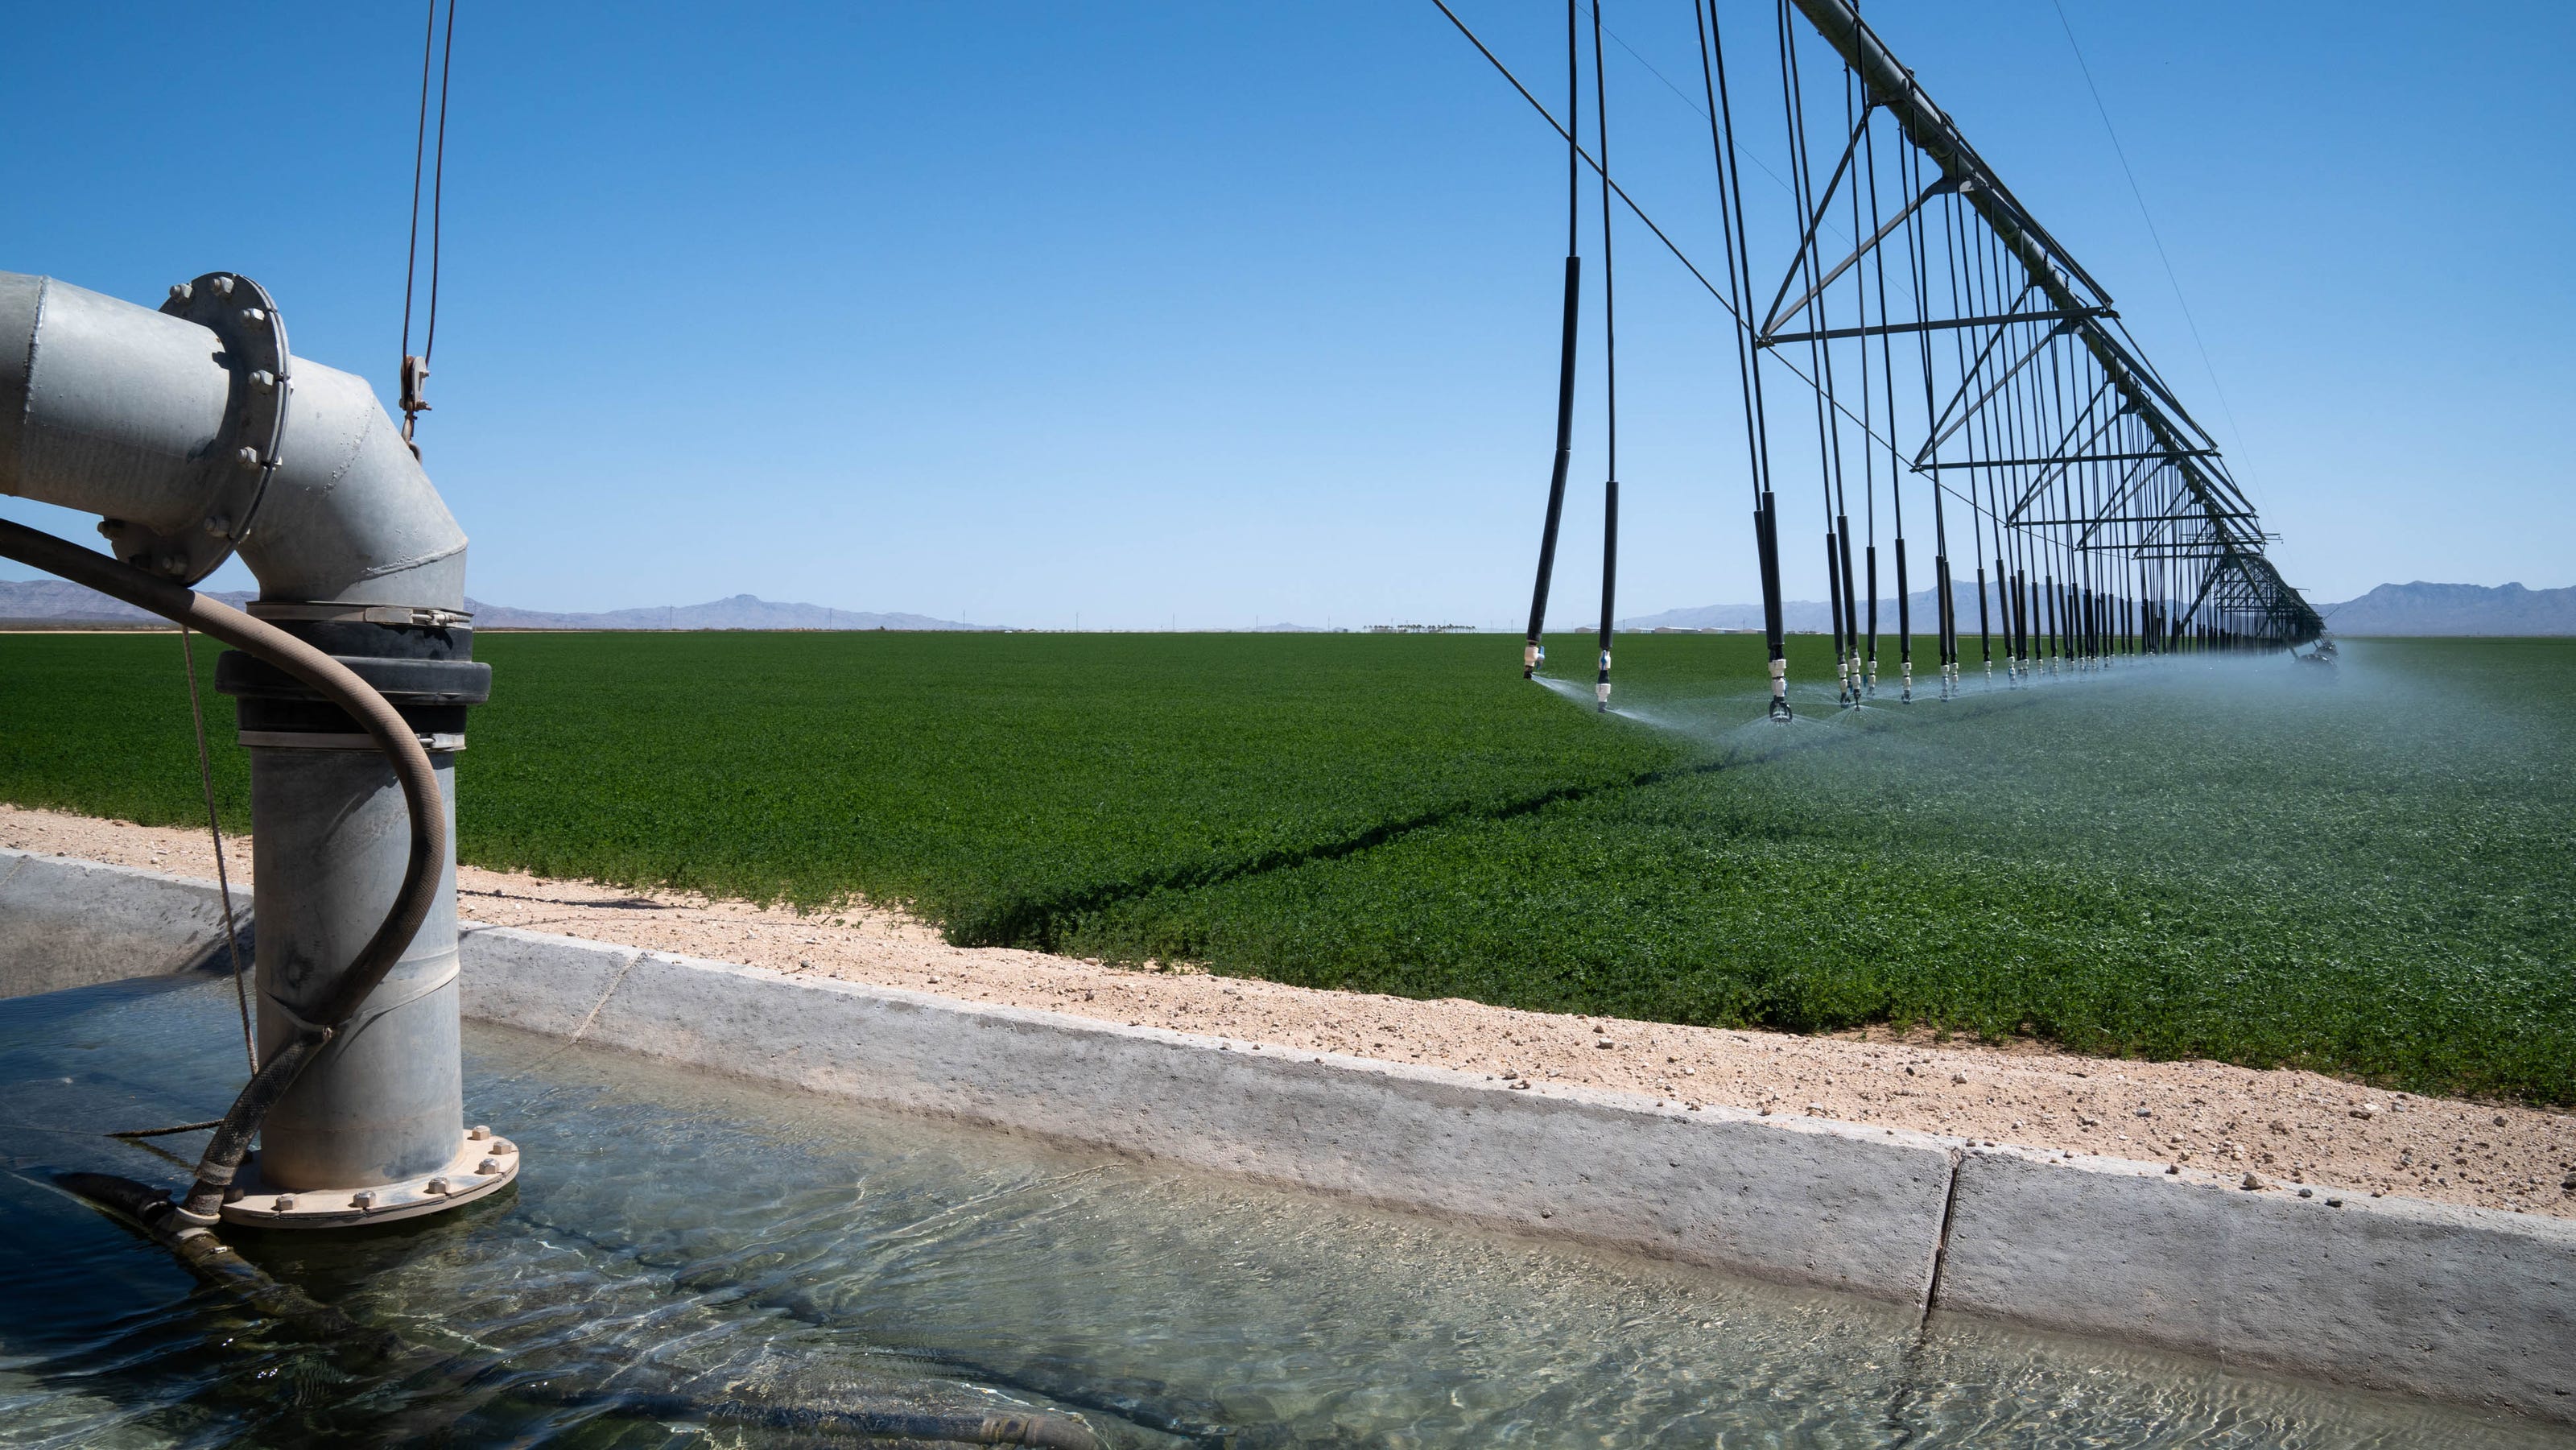 Saudi firm isn't the only investor draining rural Arizona water - The Arizona Republic